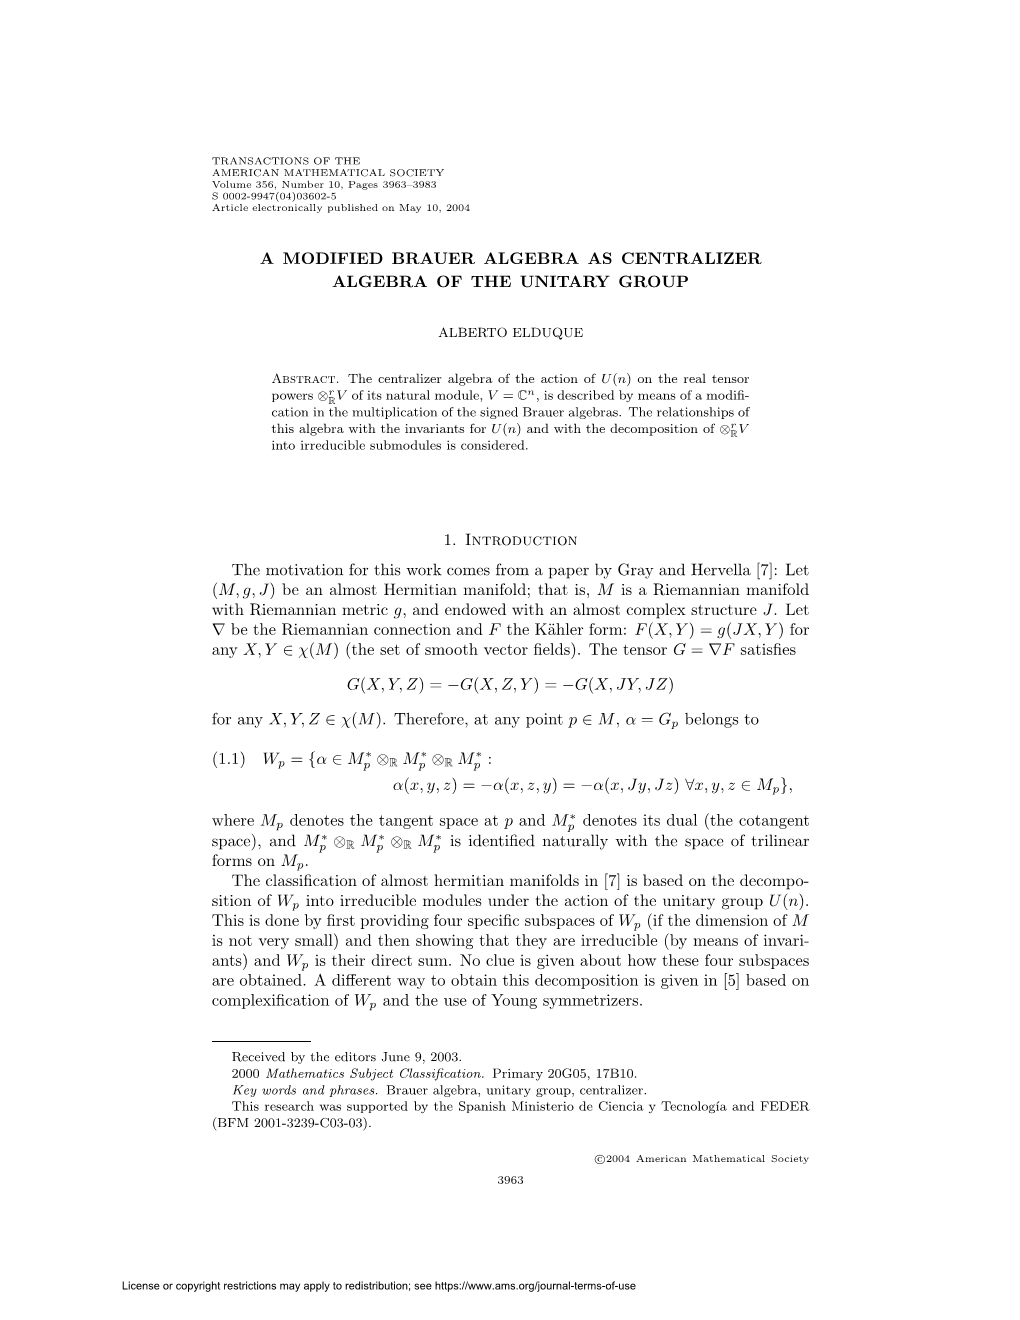 A Modified Brauer Algebra As Centralizer Algebra of the Unitary Group